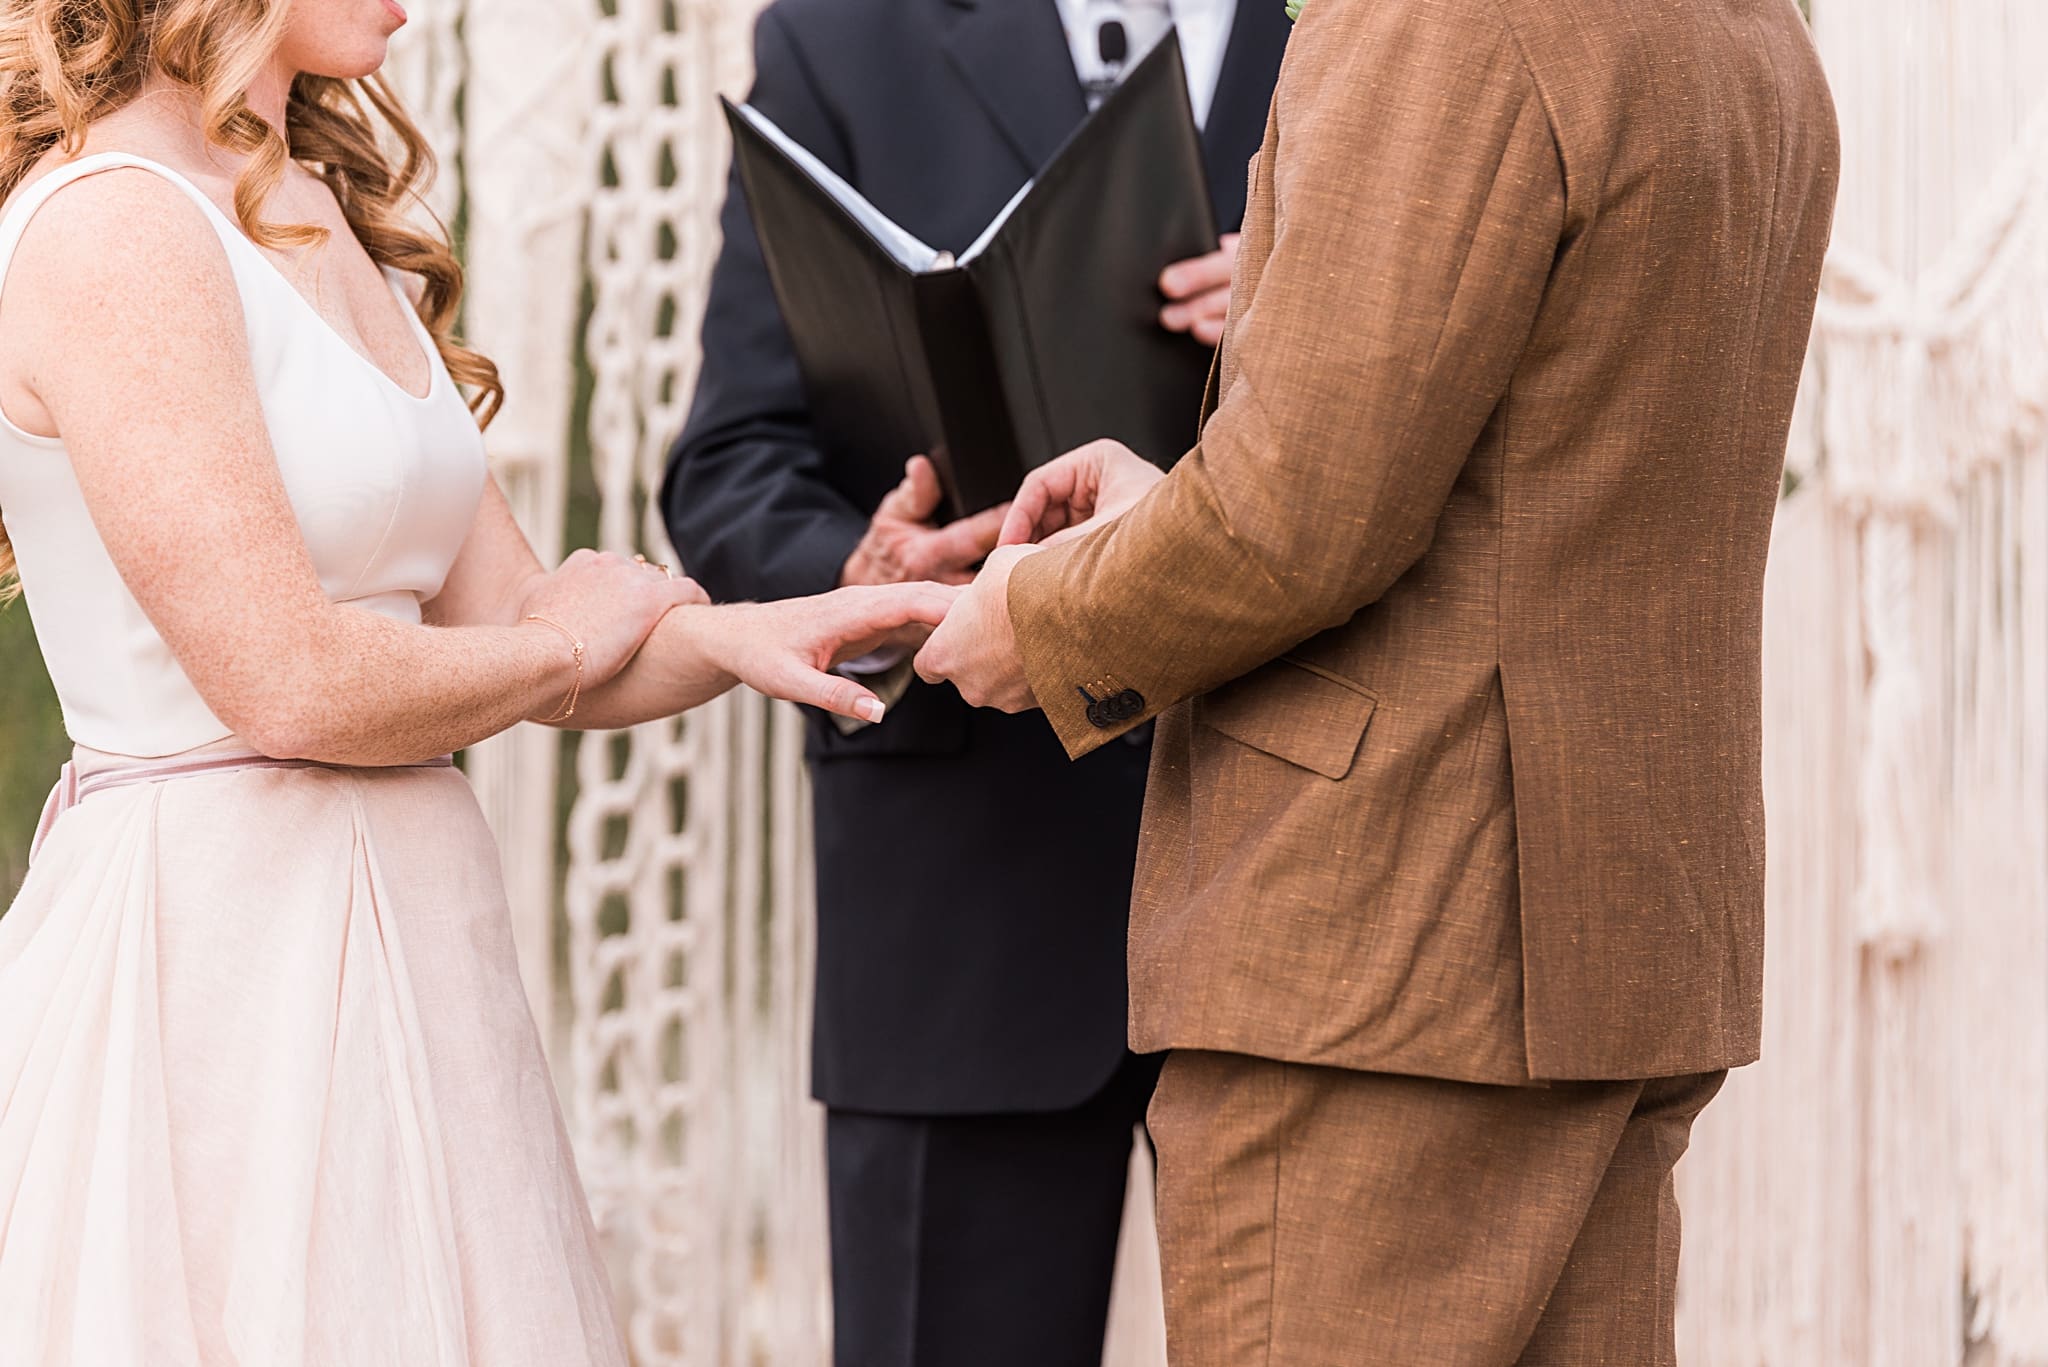 groom placing ring on bride's finger